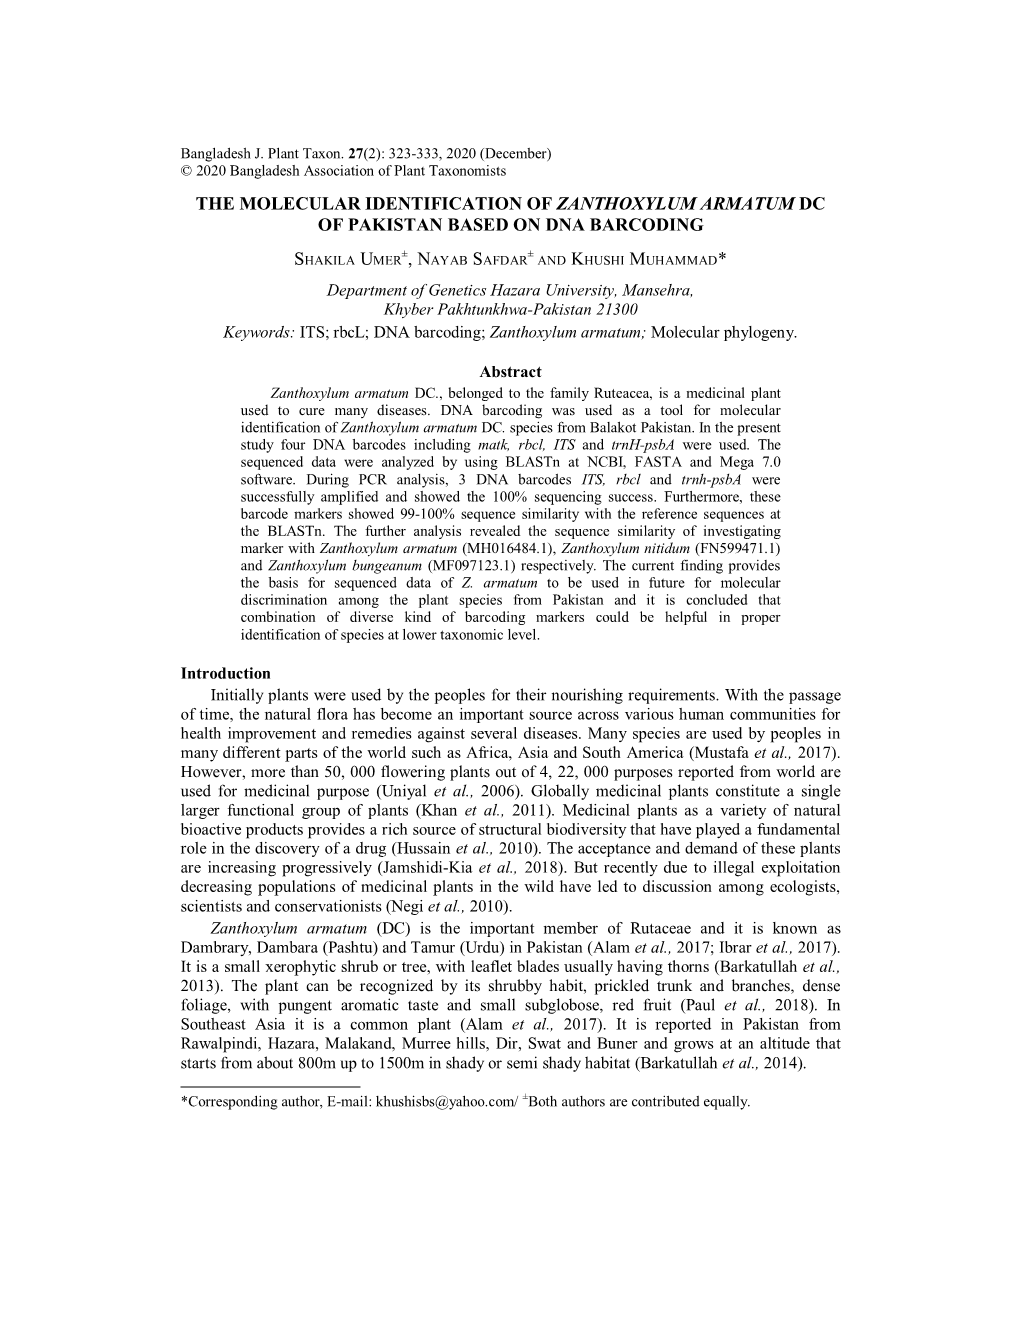 The Molecular Identification of Zanthoxylum Armatum Dc of Pakistan Based on Dna Barcoding